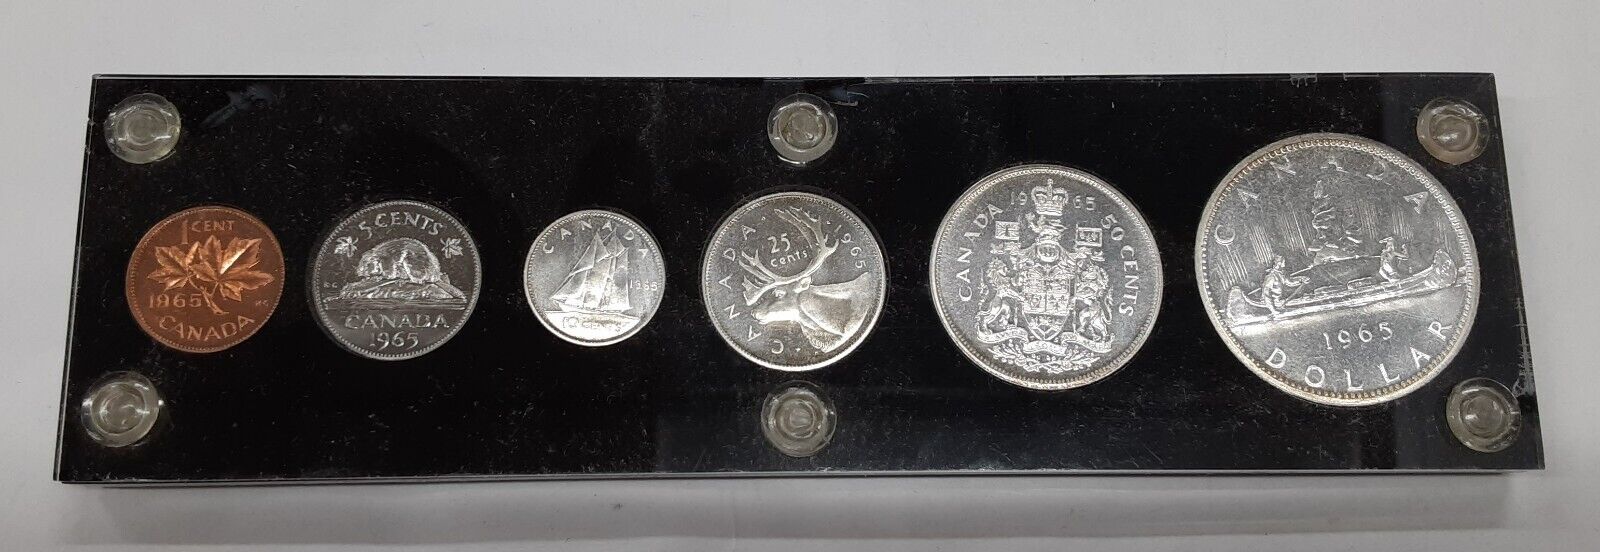 1965 Canada 6 Coin Mint Set Queen Elizabeth II BU in Black Acrylic Holder